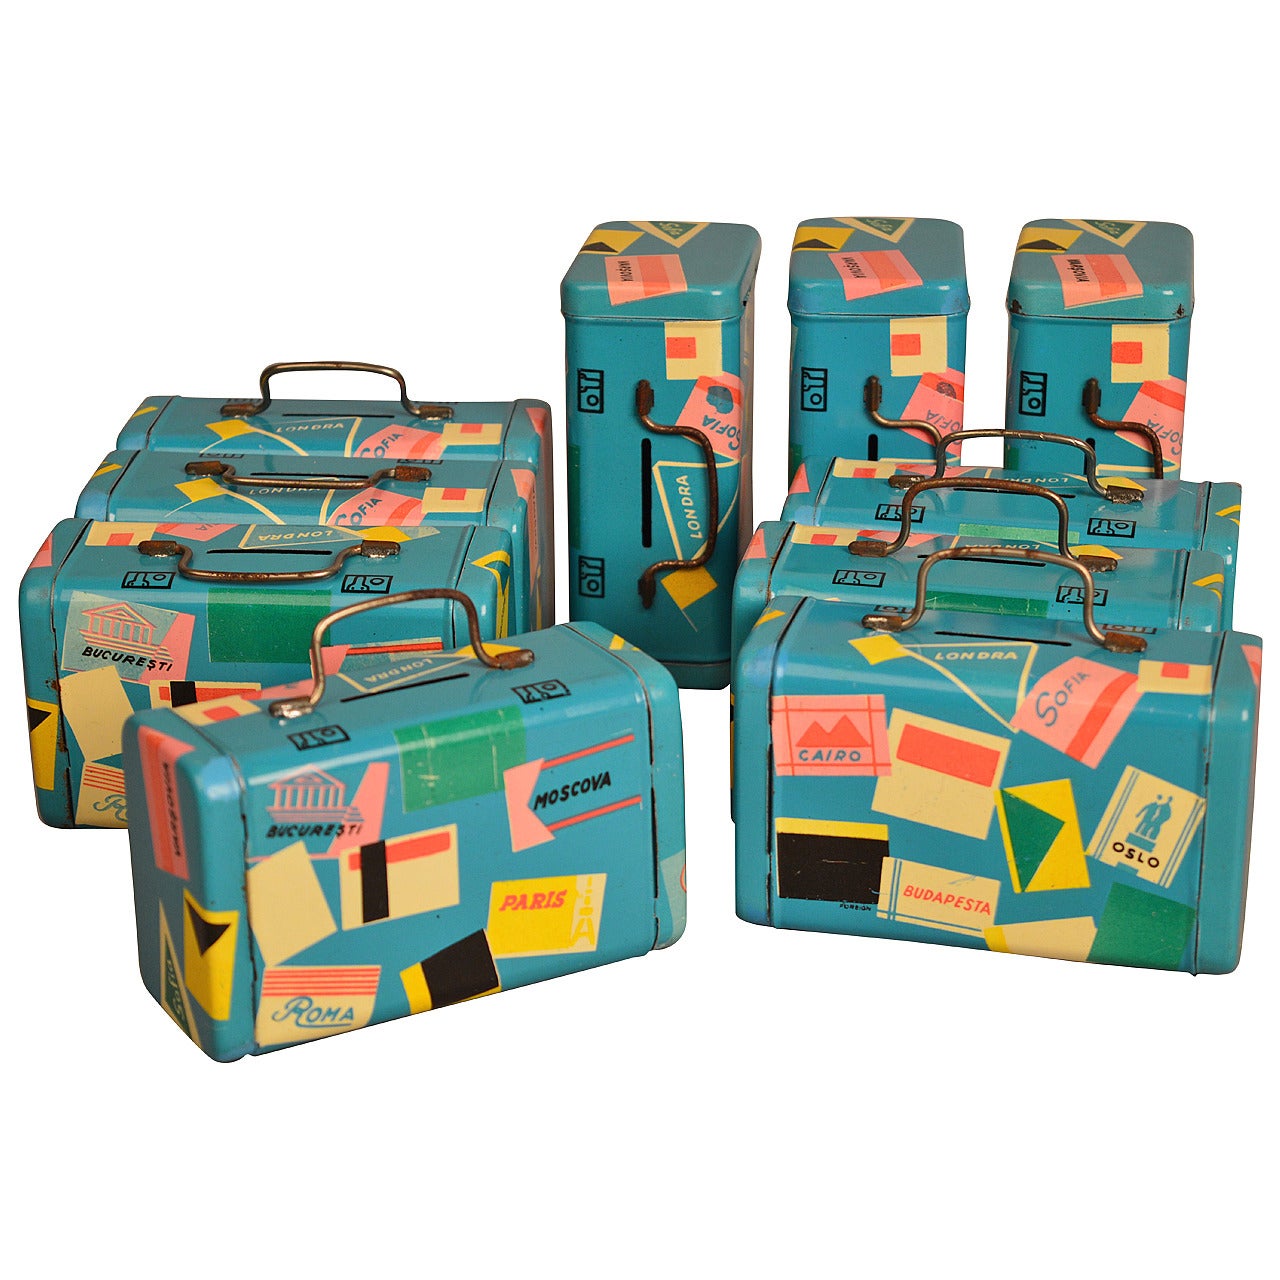 Ten Unused Vintage Tin "Suitcase" Banks from Belgium